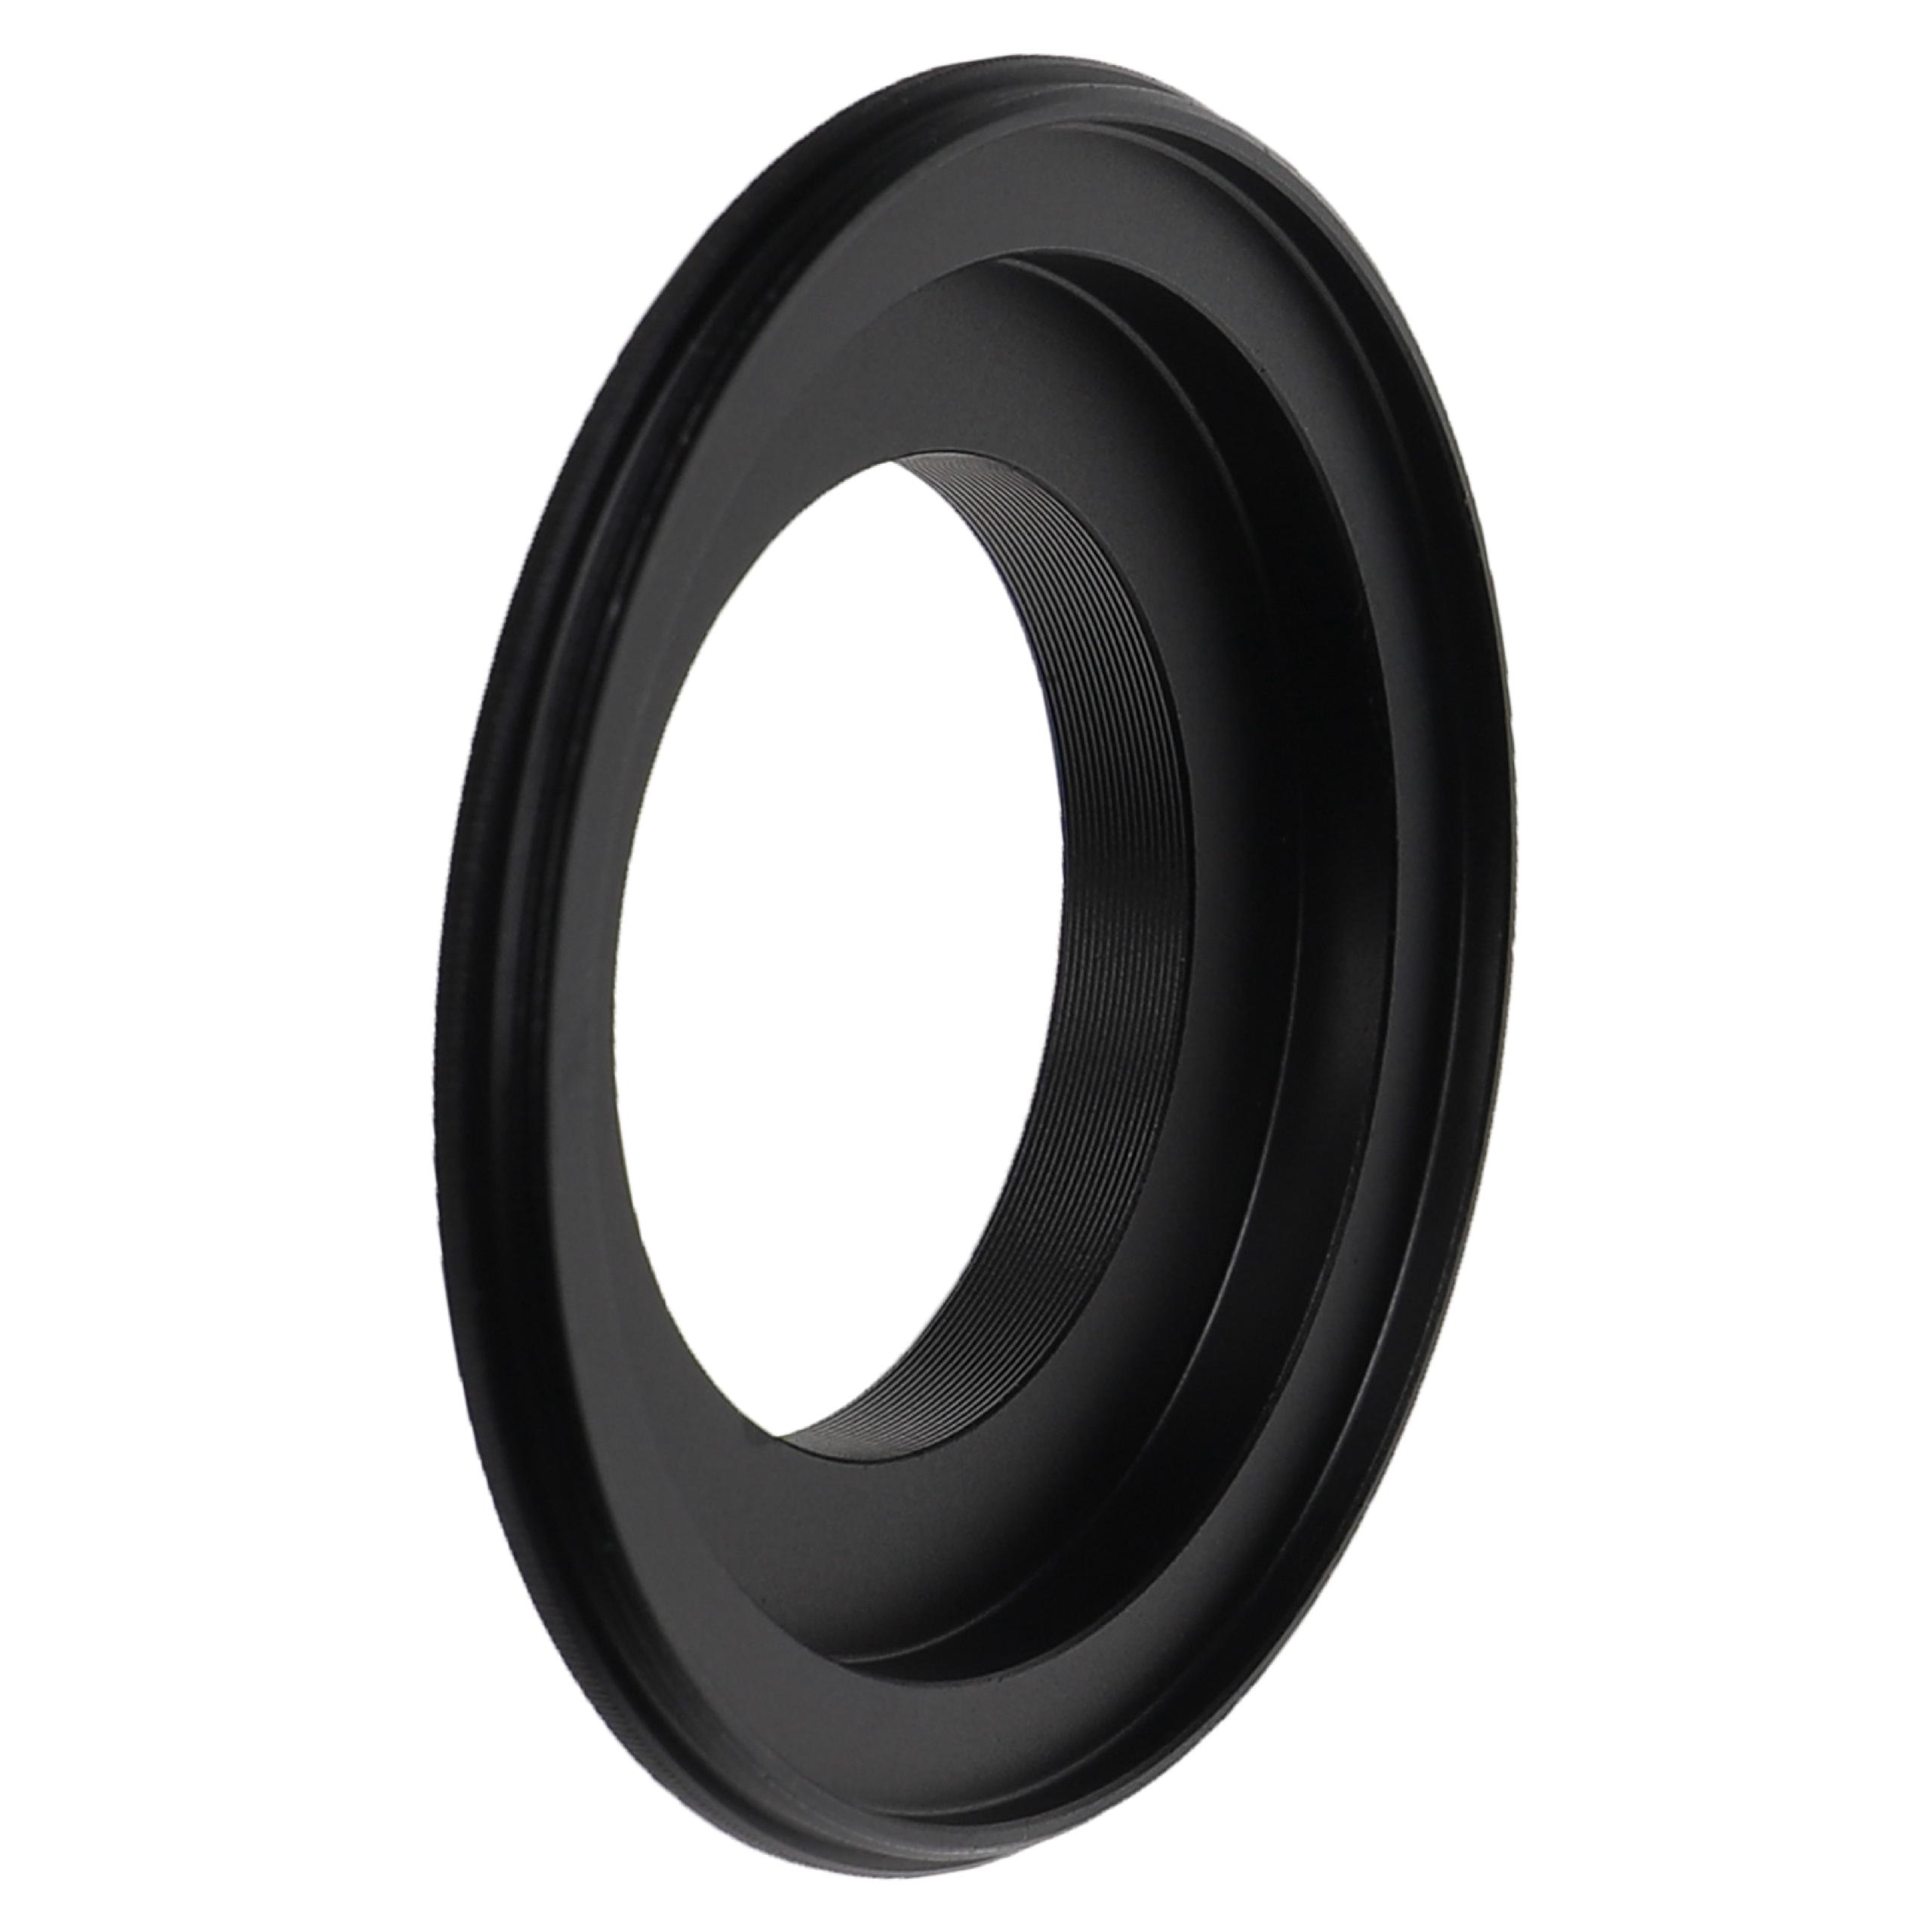 72 mm Retro Adapter suitable for Sony NEX E-Mount Cameras & Lenses - Retro Ring